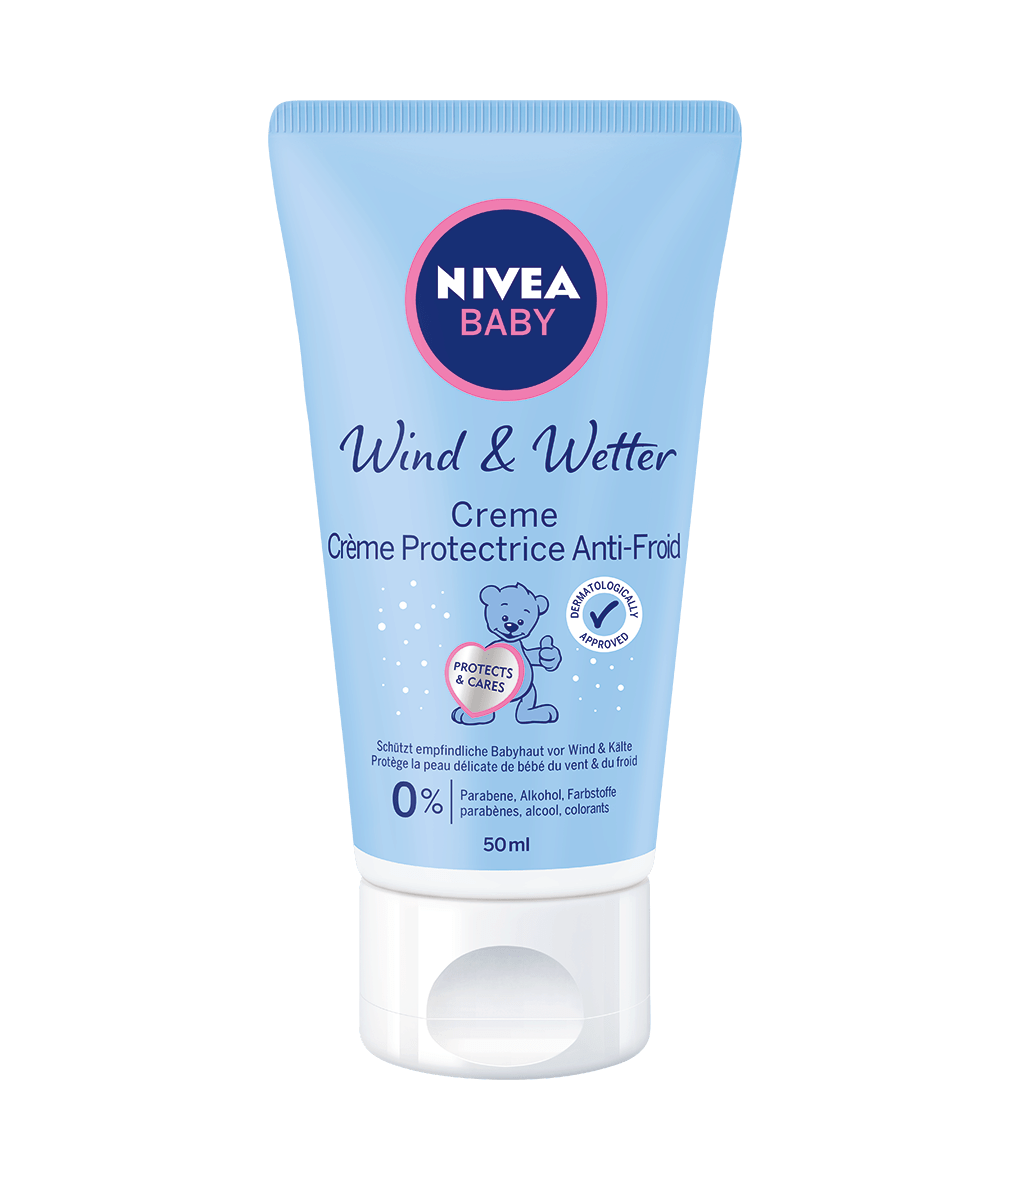 NIVEA BABY Crème Protectrice Anti-Froid 50ml